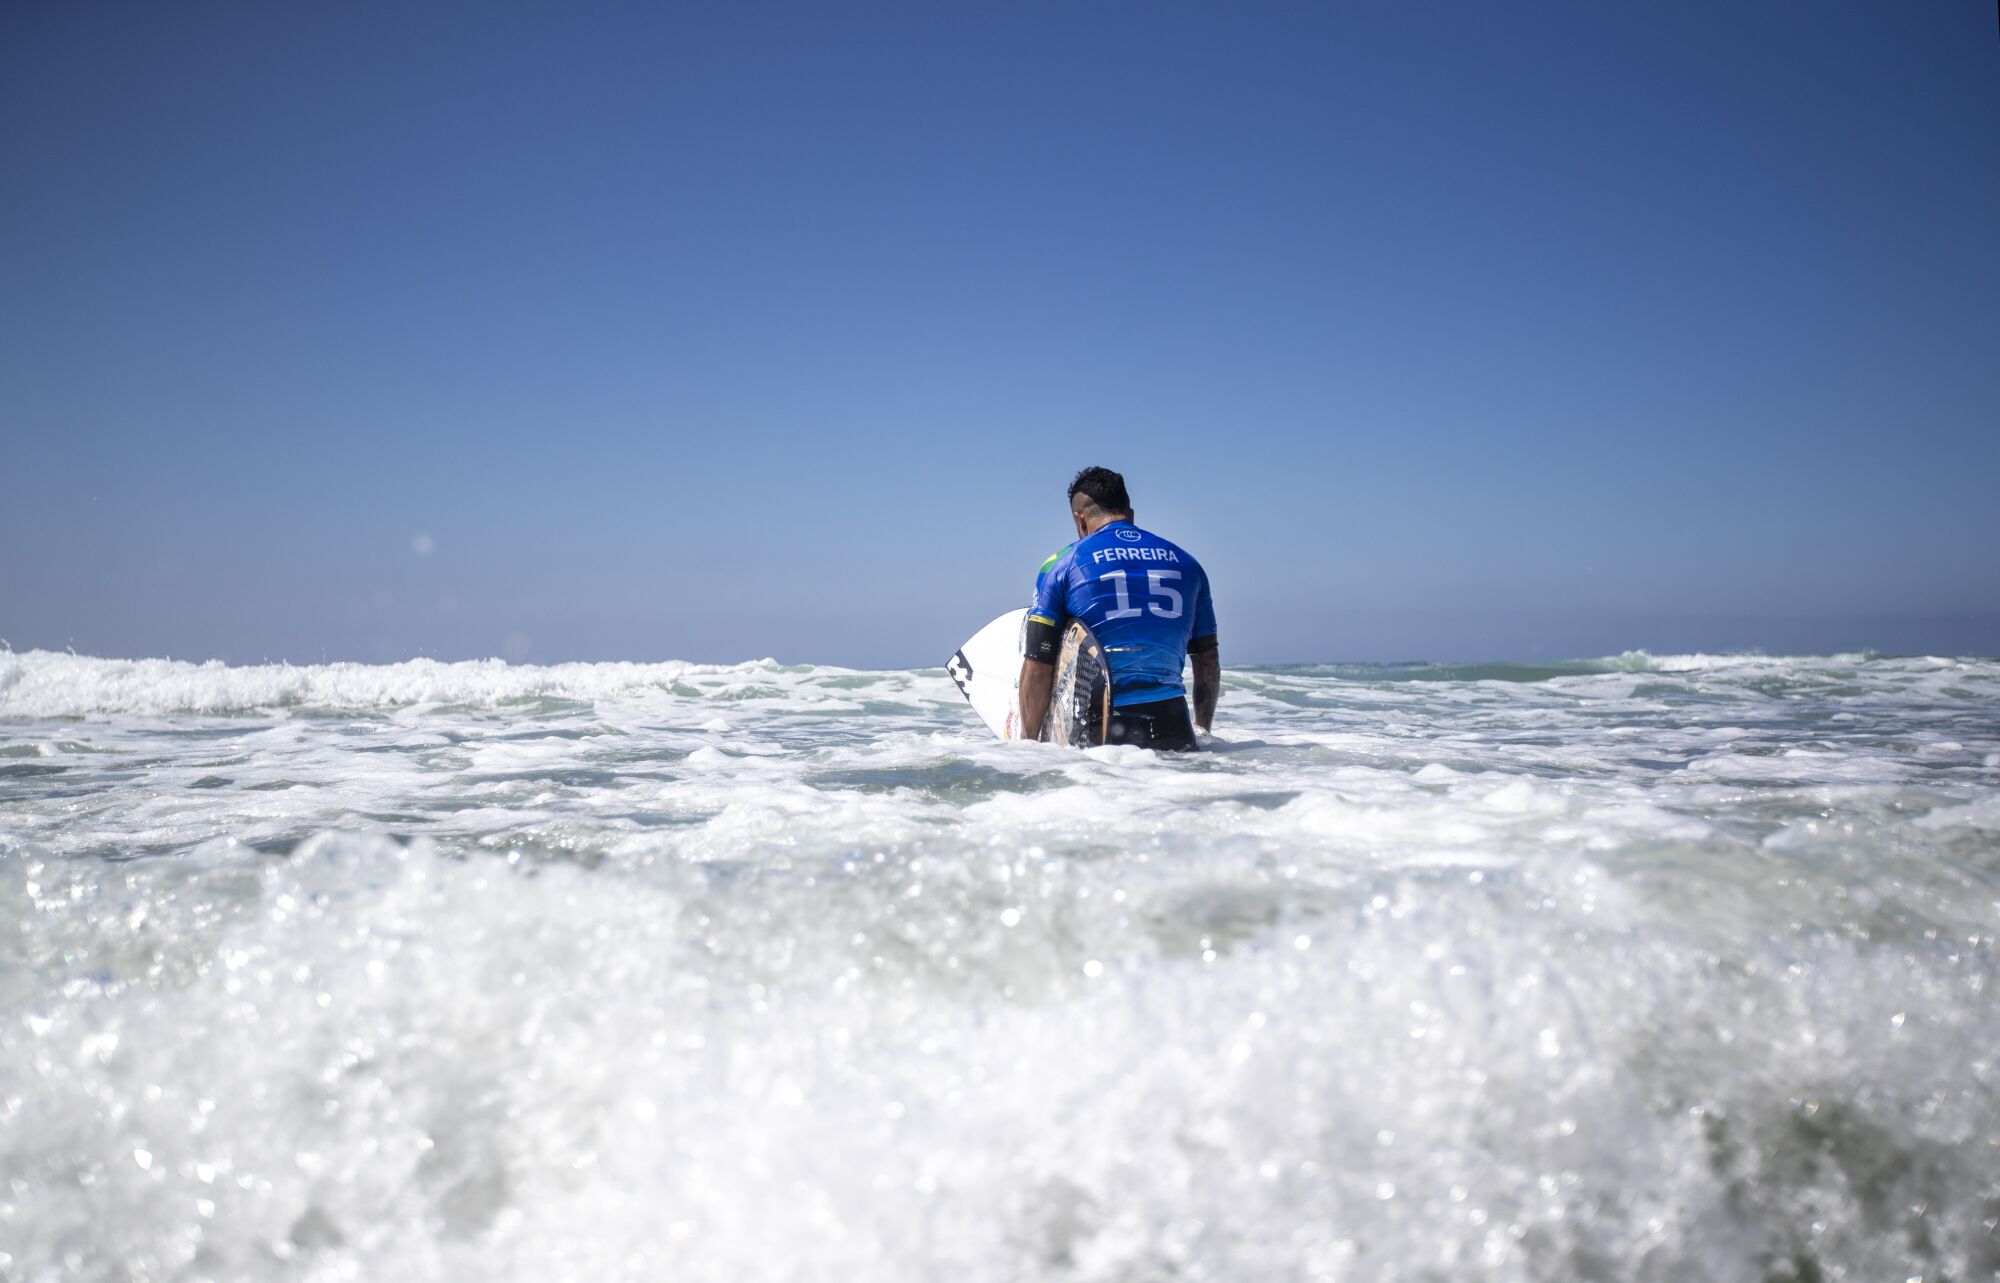 Italo Ferreira stands alone in the ocean after losing to Filipe Toledo